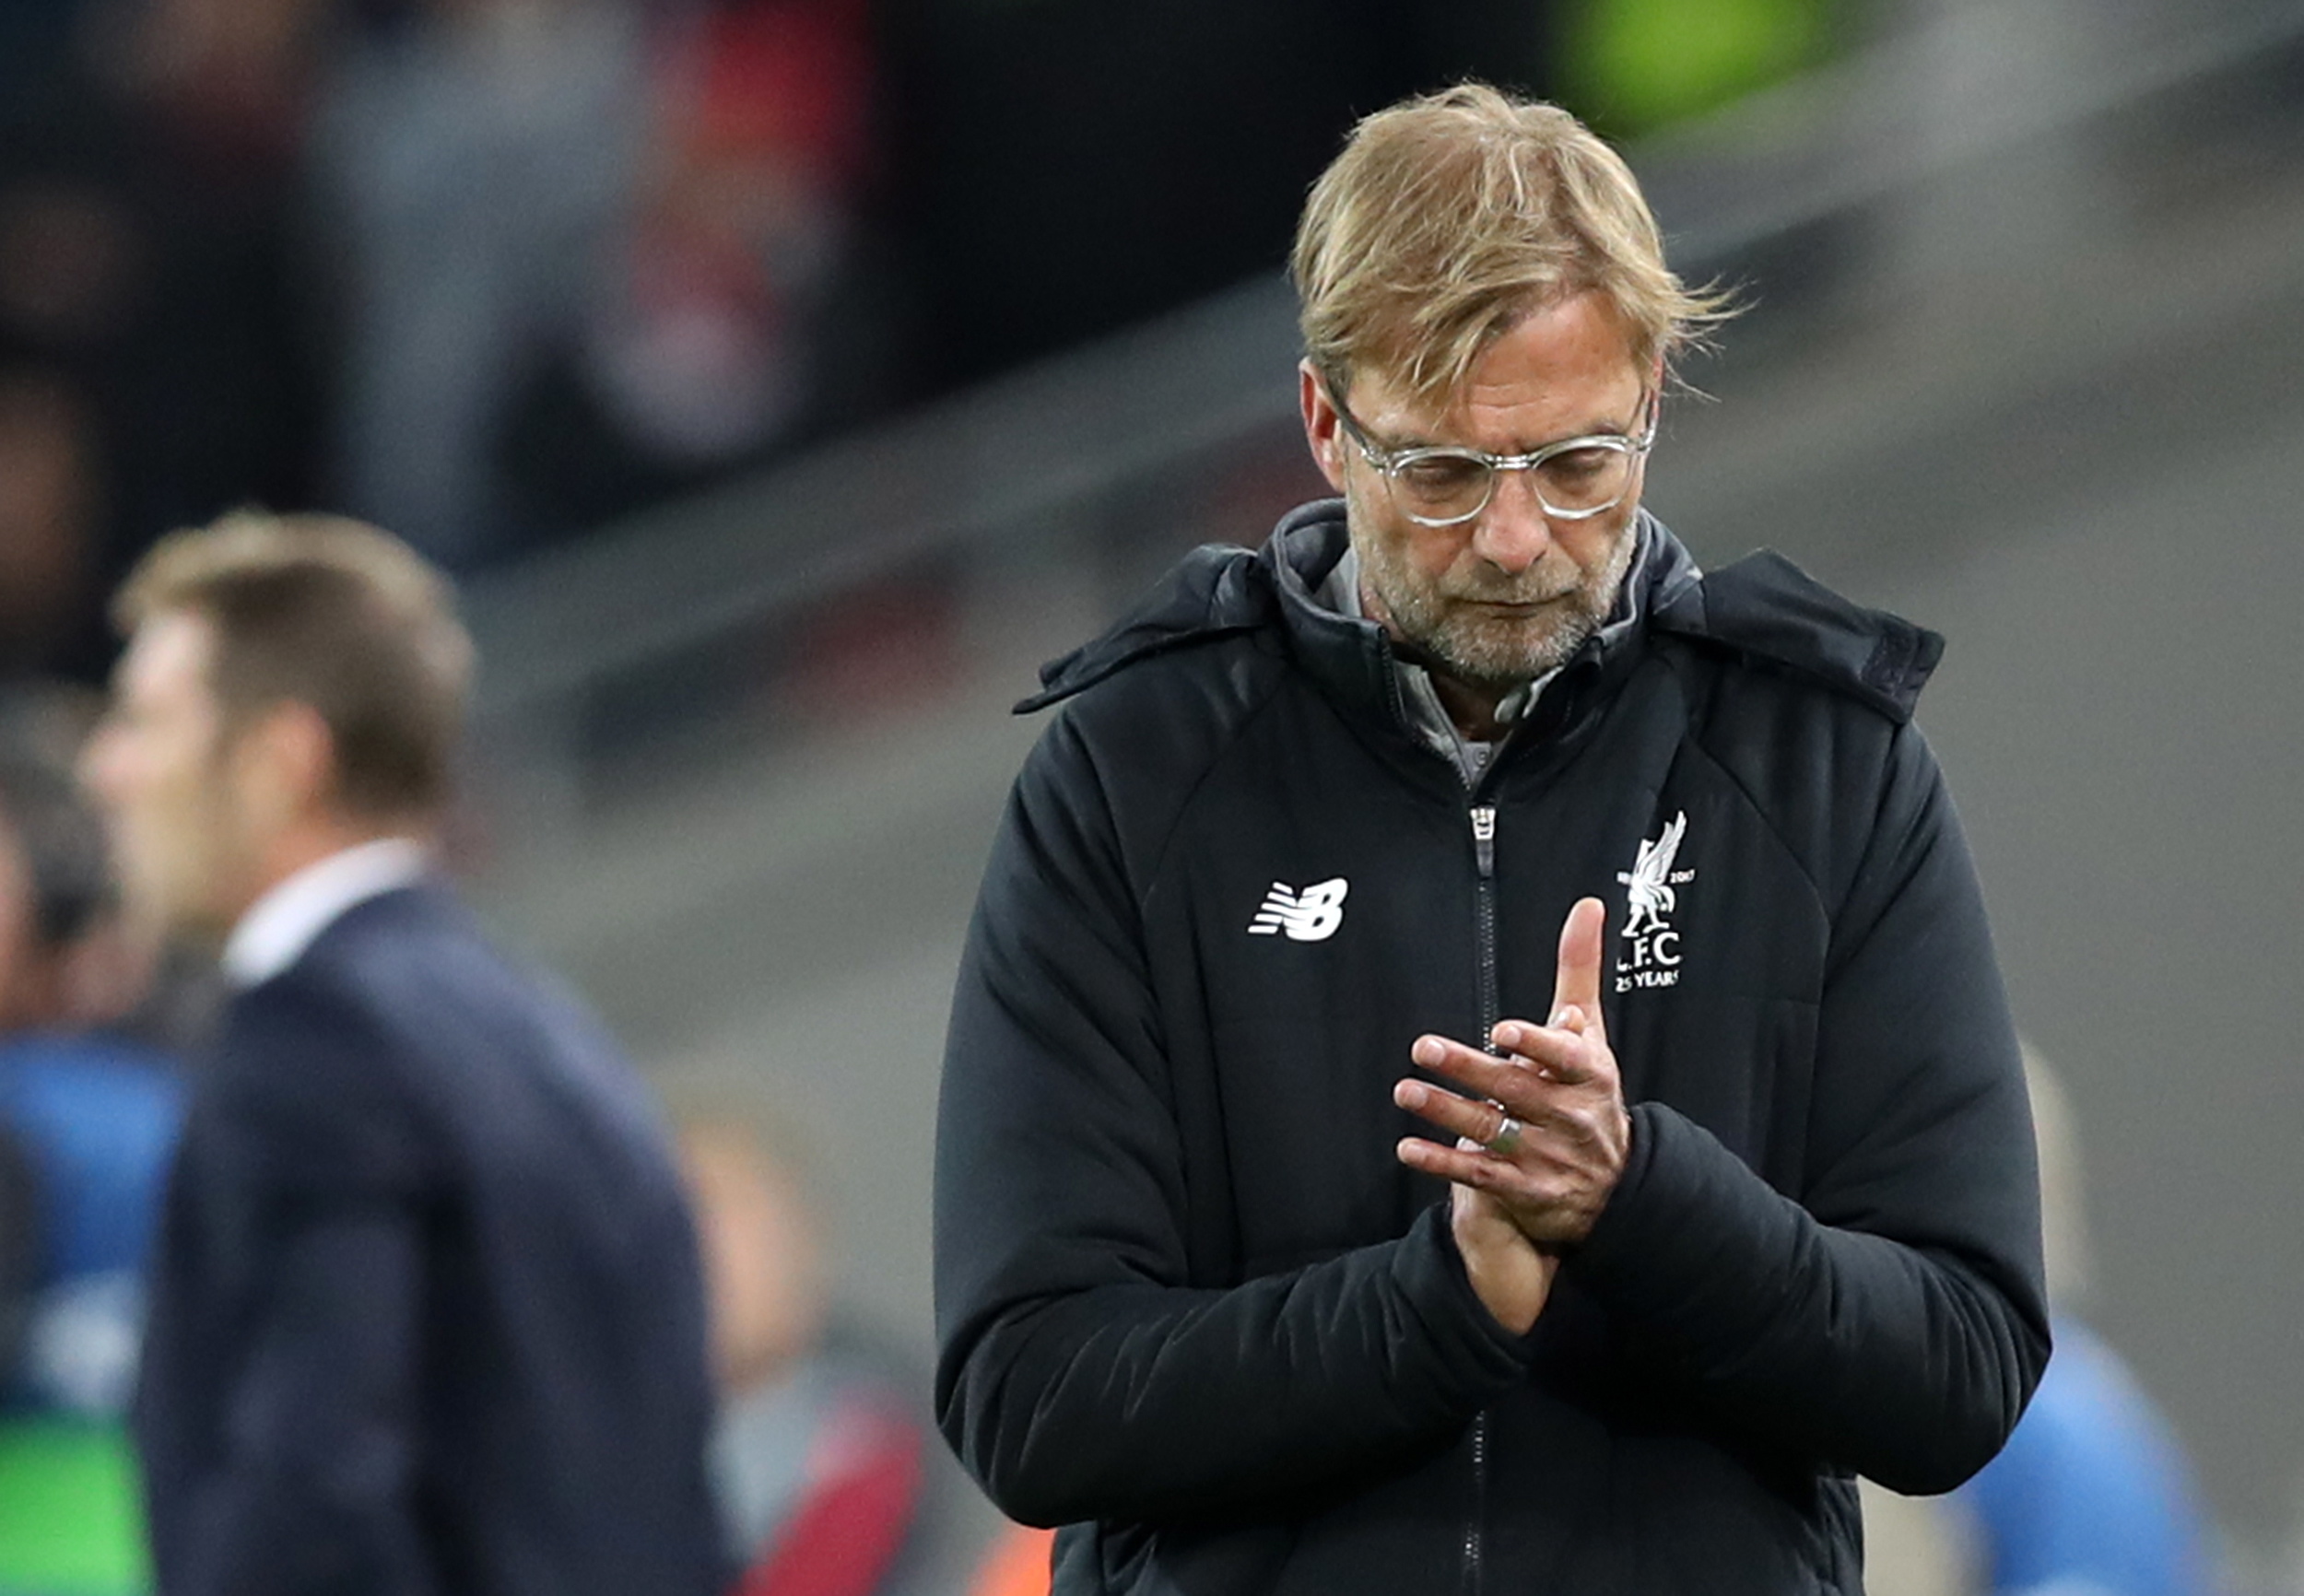 Liverpool's head coach Jurgen Klopp (Artyom KorotayevTASS via Getty Images)